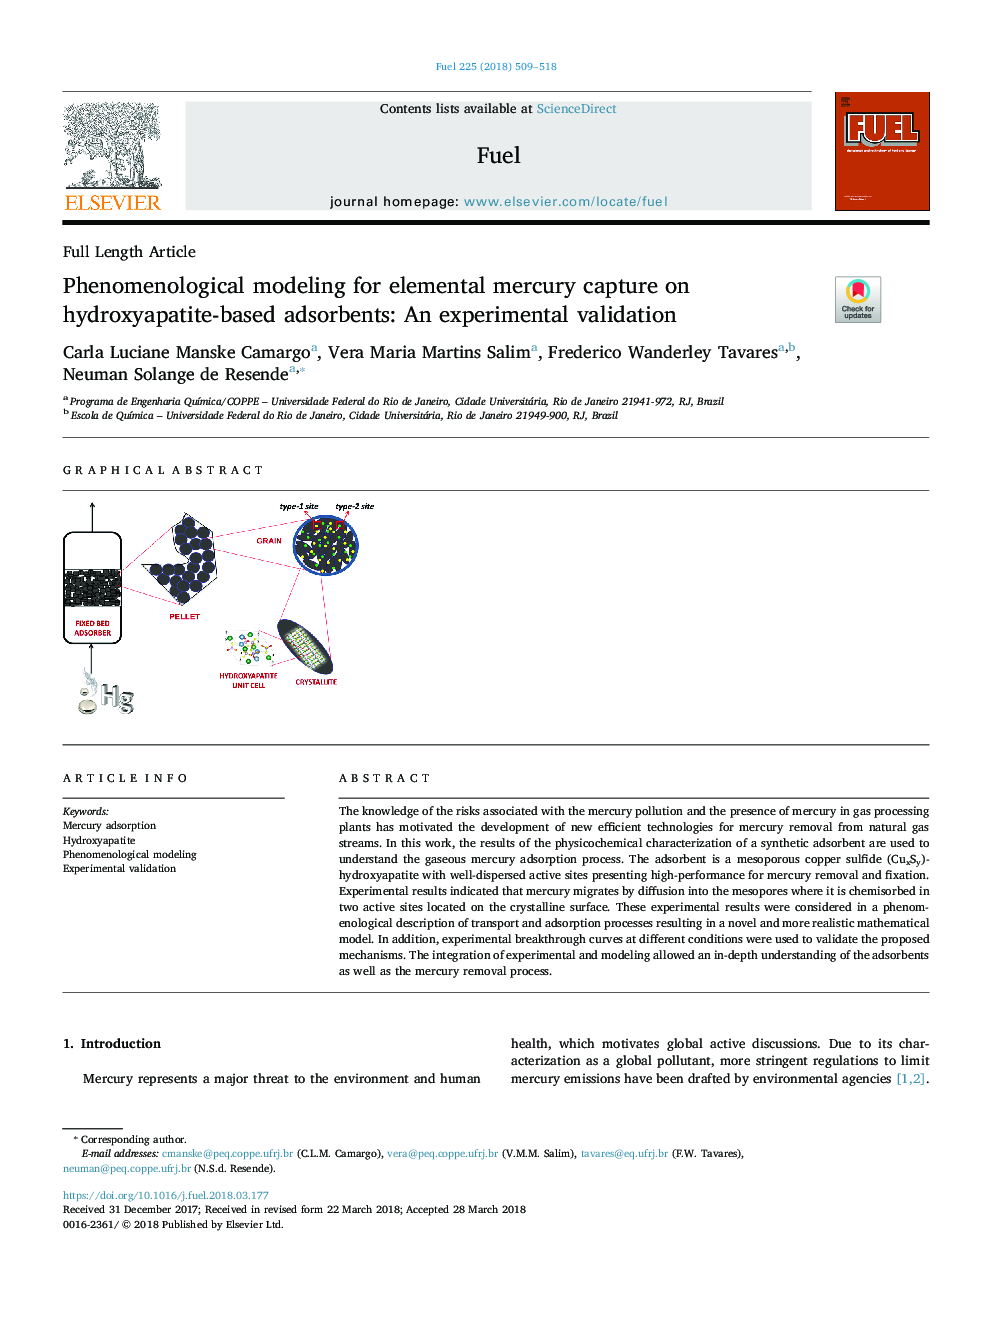 Phenomenological modeling for elemental mercury capture on hydroxyapatite-based adsorbents: An experimental validation